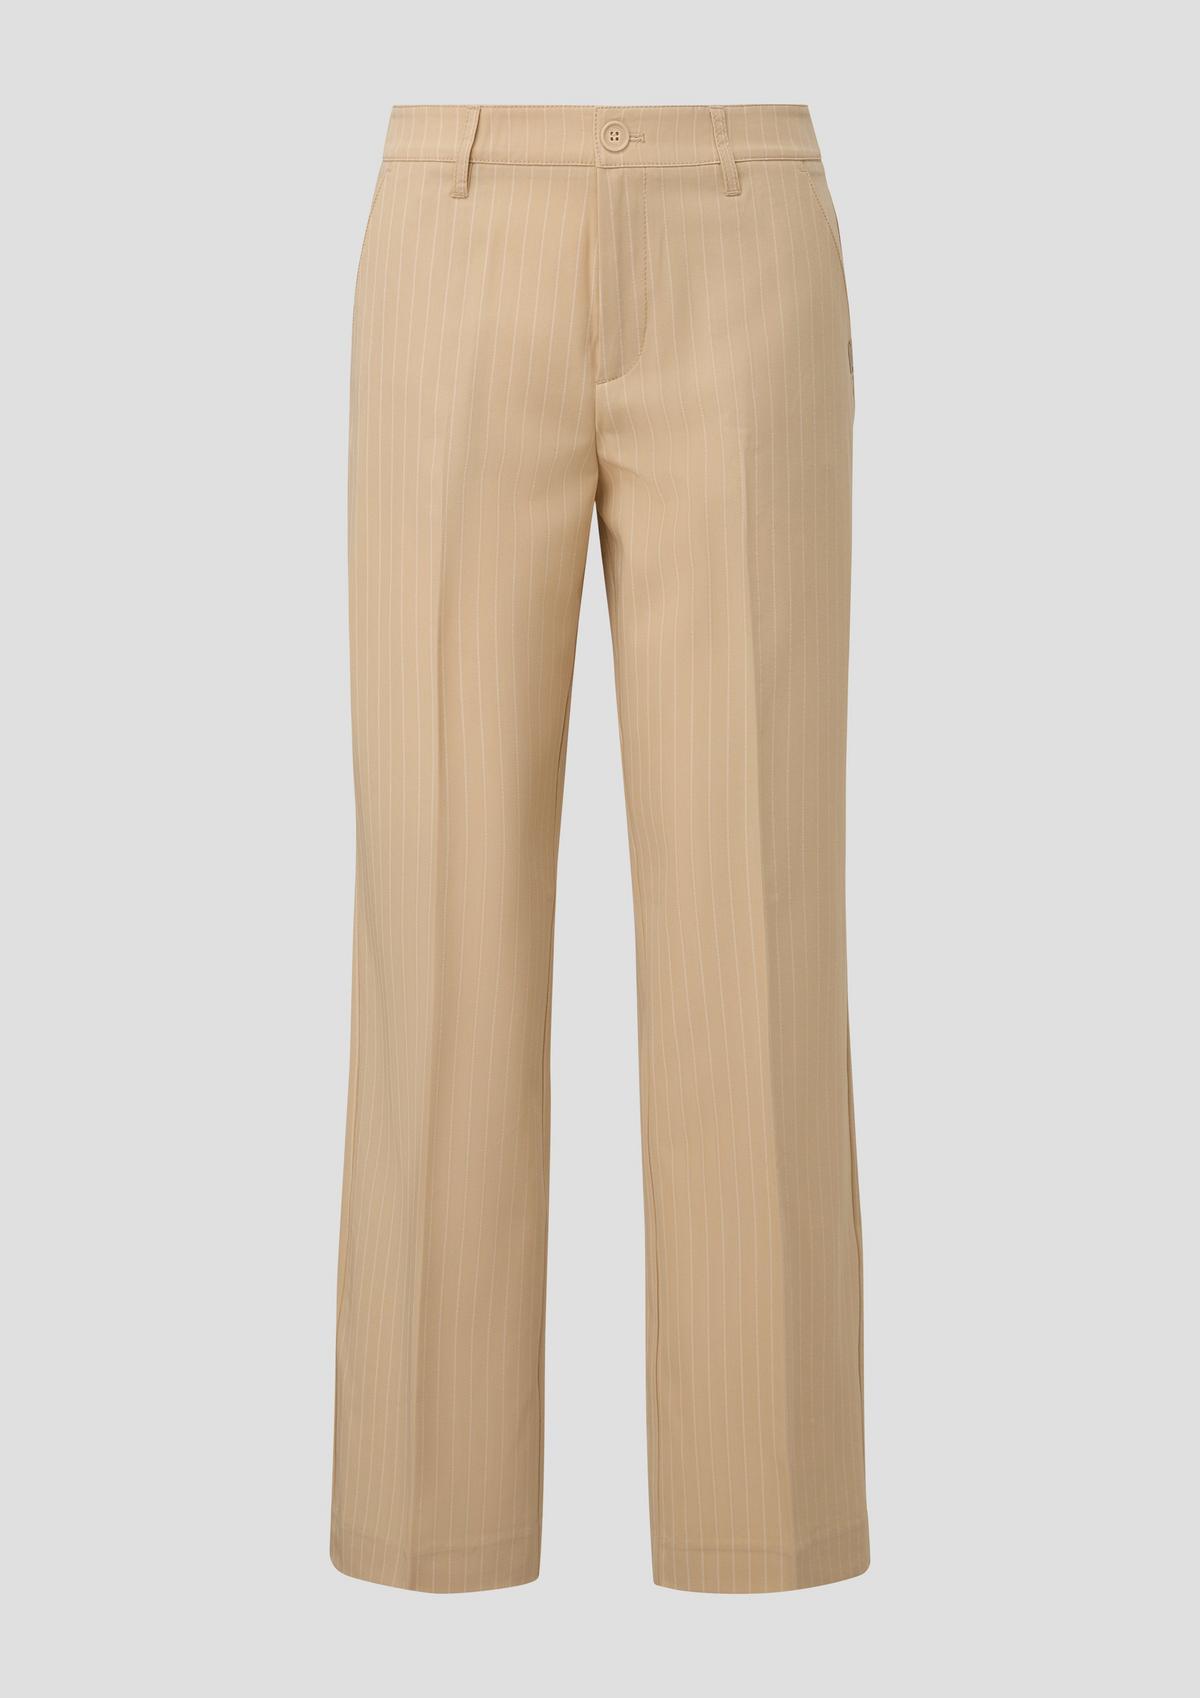 s.Oliver Regular: kalhoty s širokými nohavicemi, s vlasovým proužkem